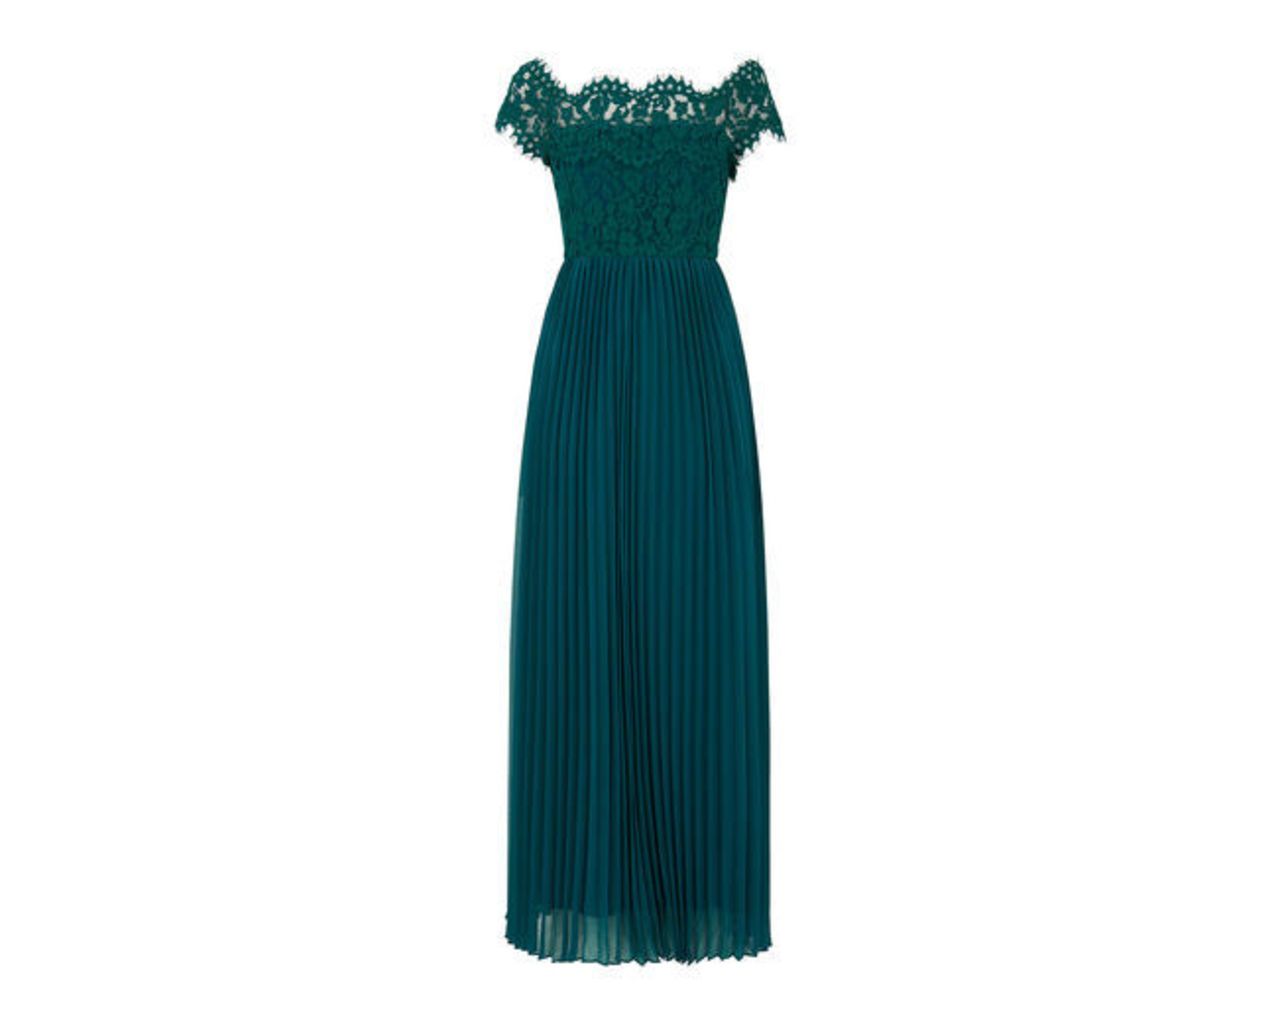 Bardot Lace Pleat Maxi Dress